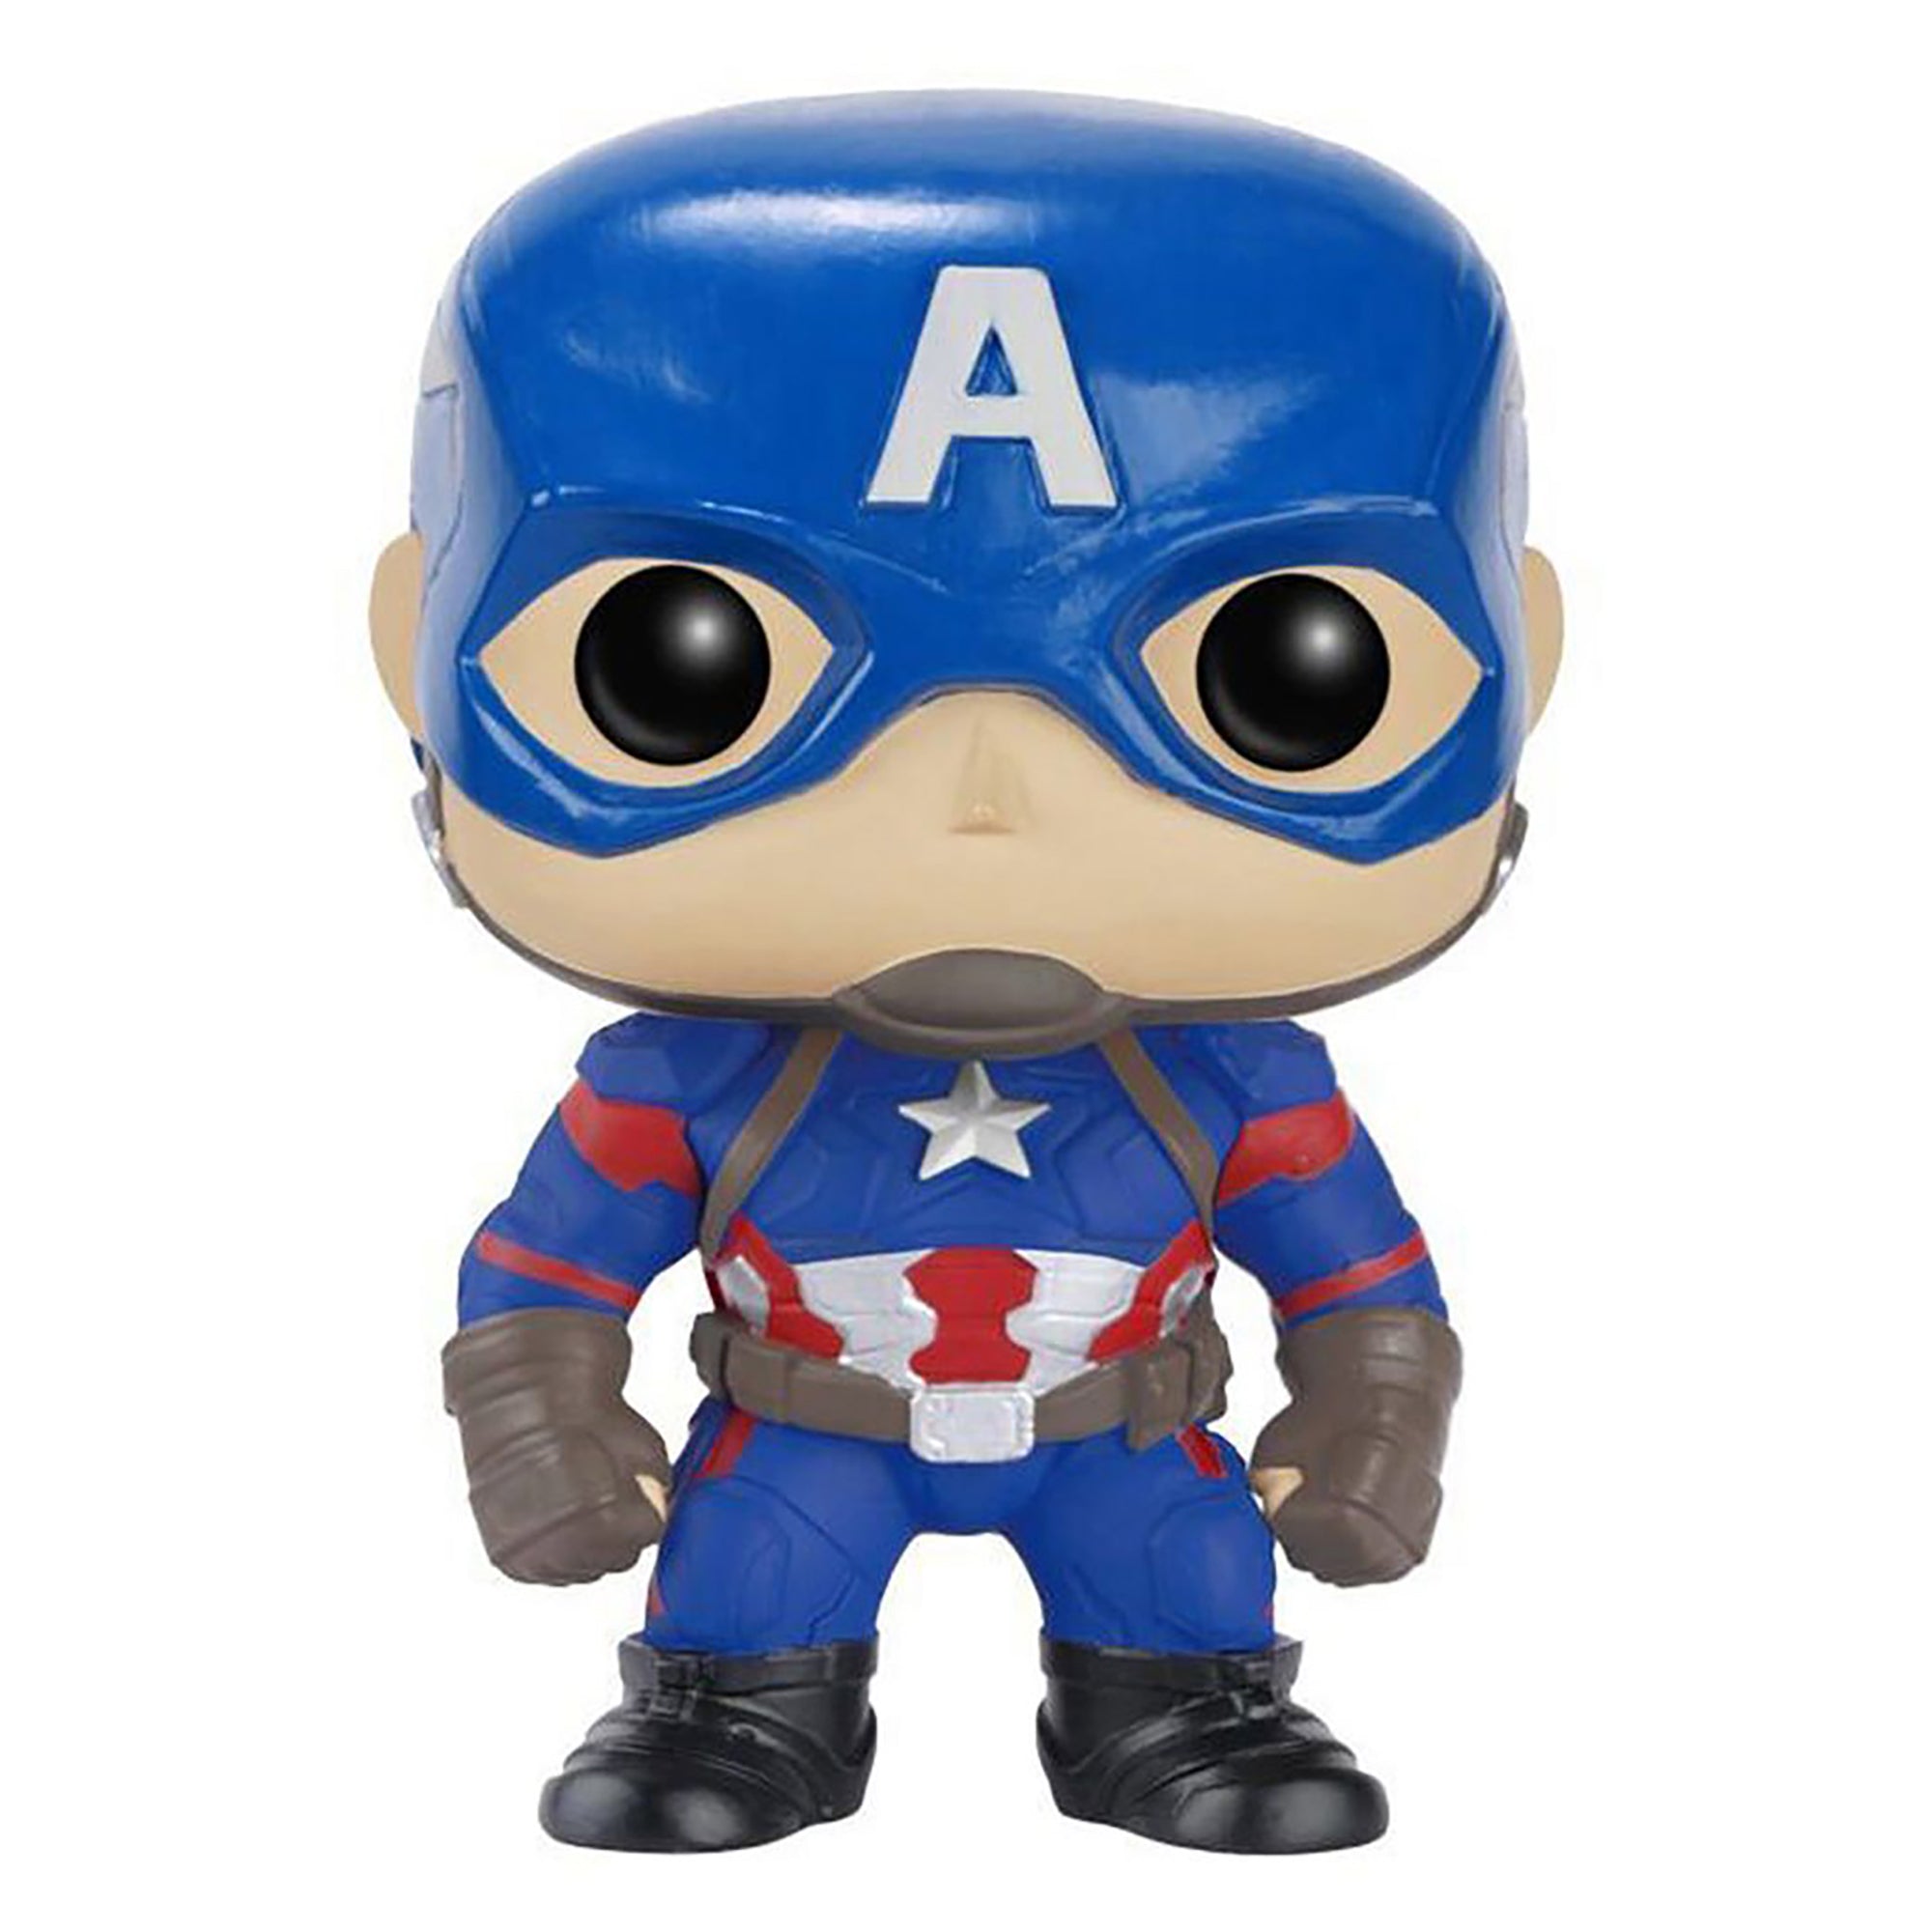 Funko Captain America 3: Civil War - Captain America Pop! Vinyl